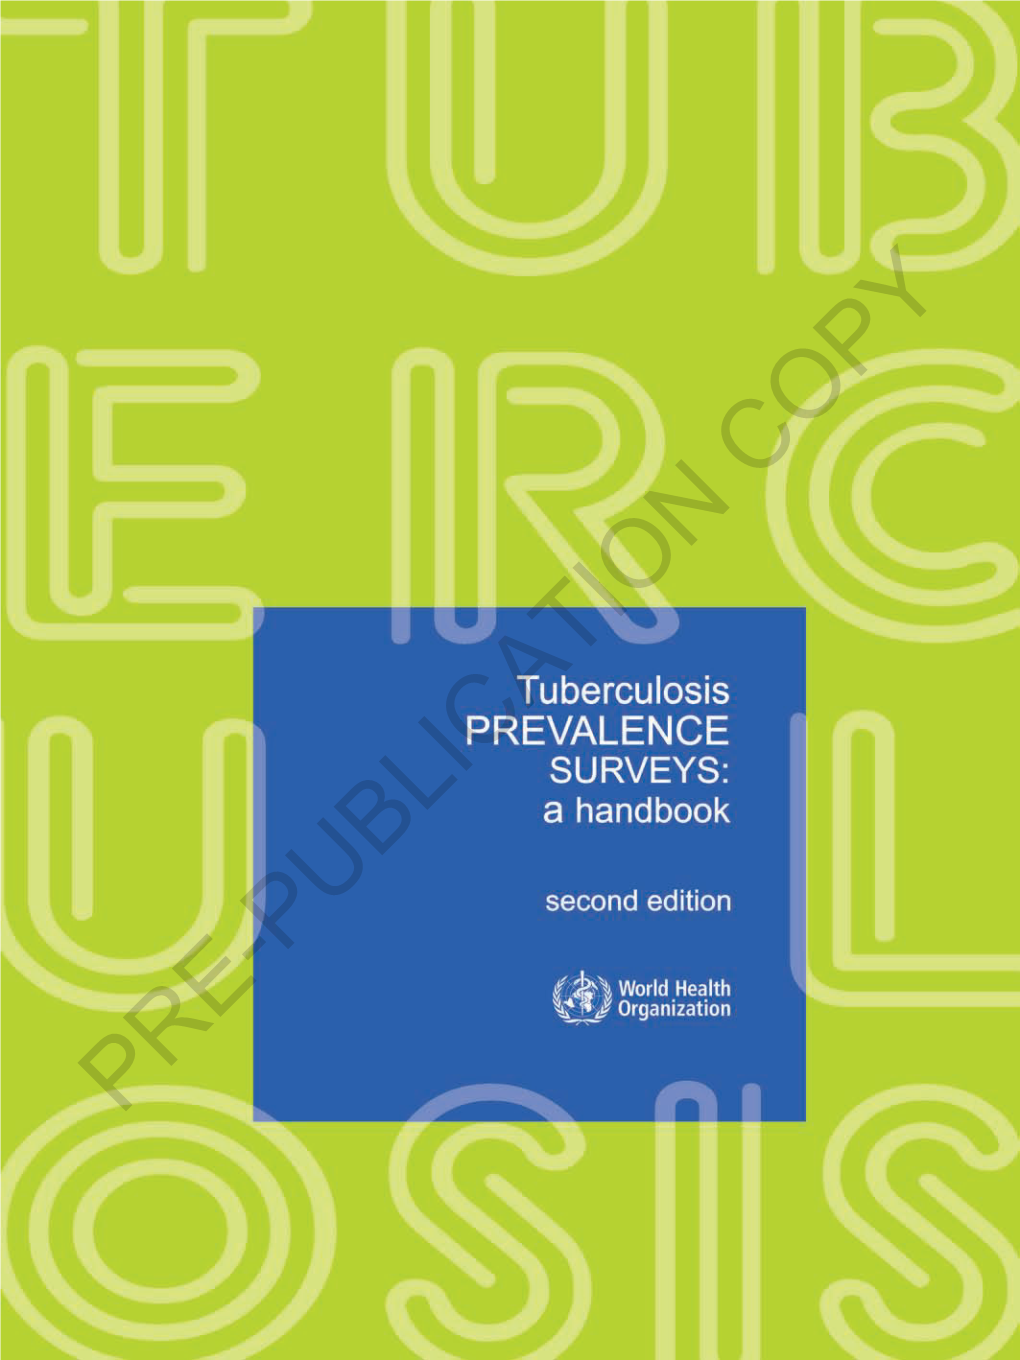 Tuberculosis PREVALENCE SURVEYS: a Handbook